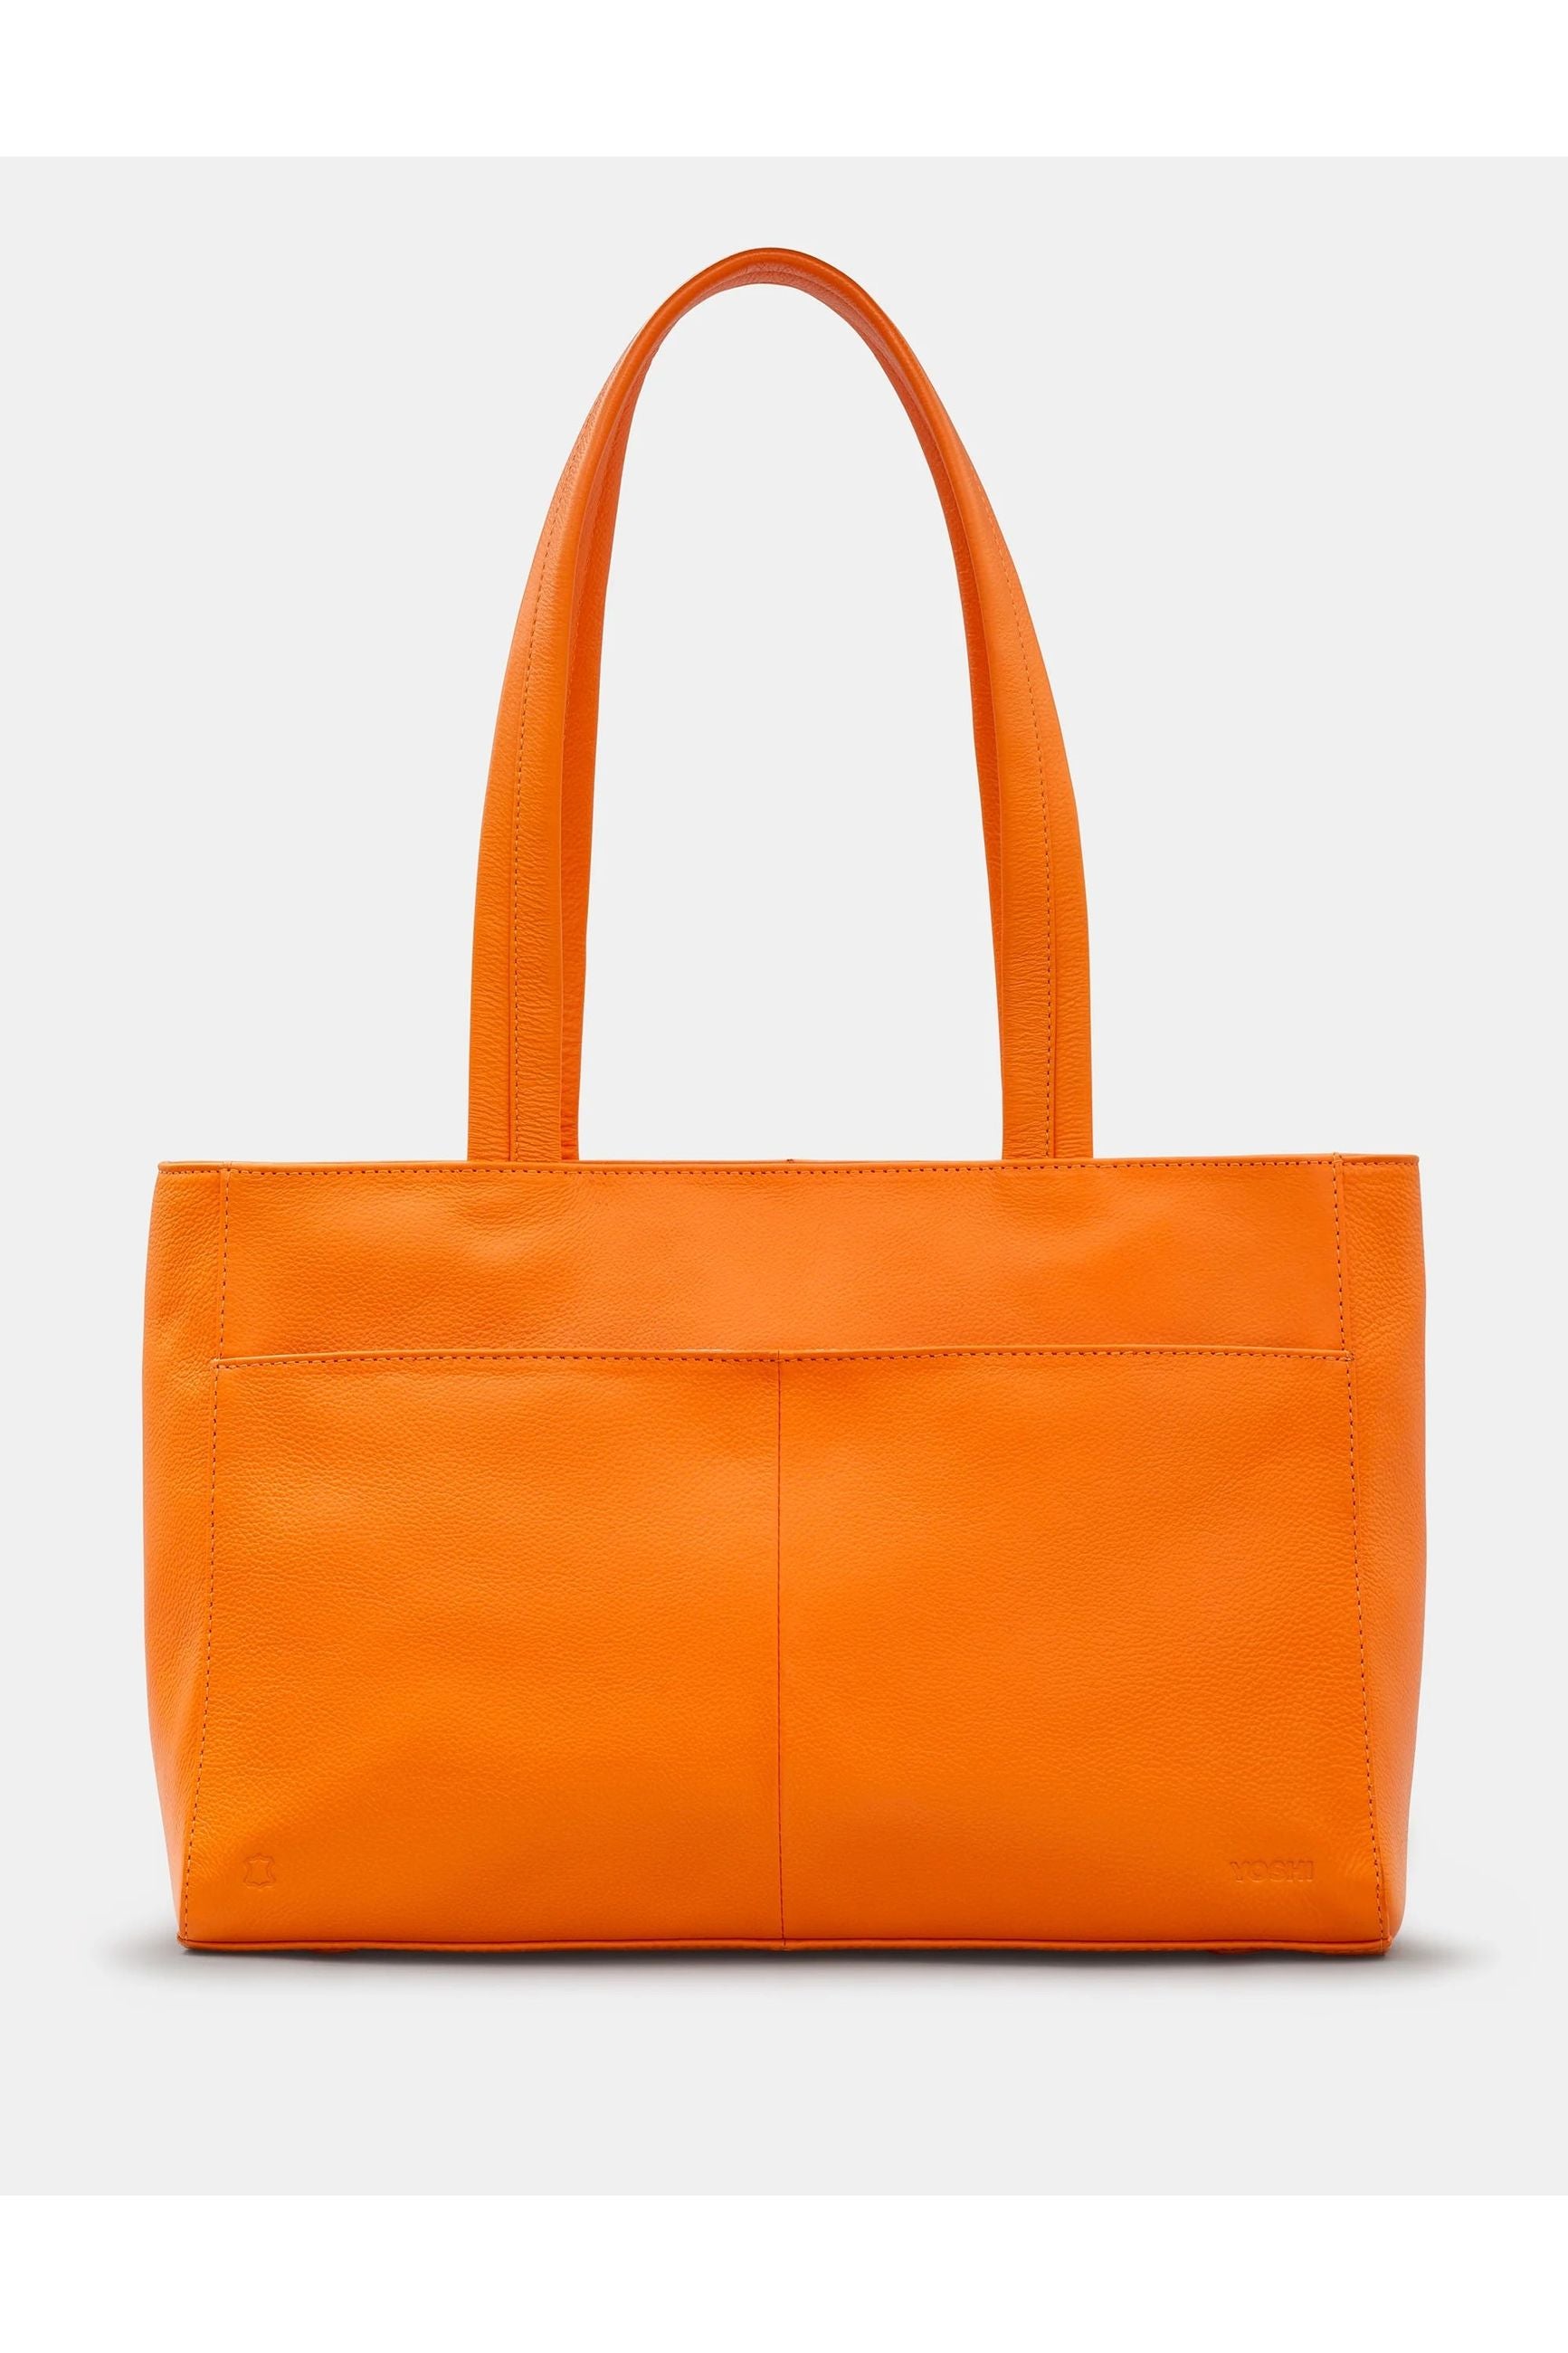 Yoshi Harrington Leather Shoulder bag in orange